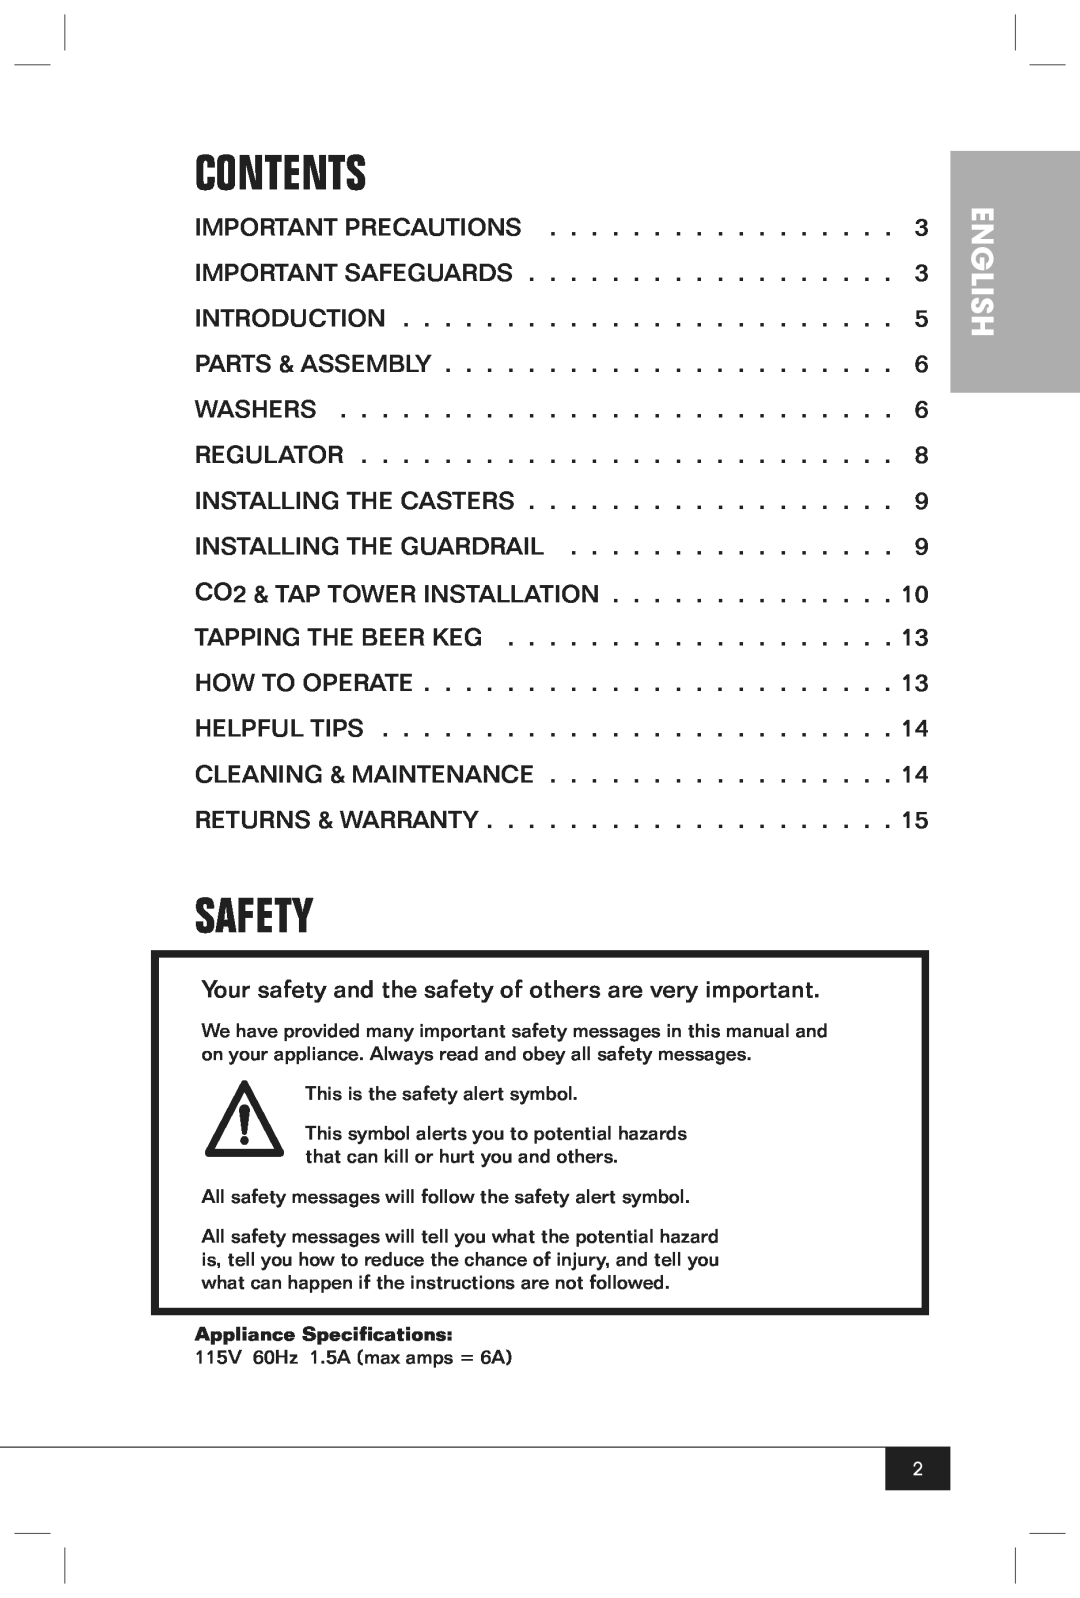 Nostalgia Electrics KRS-2150 manual Contents, Safety, English 